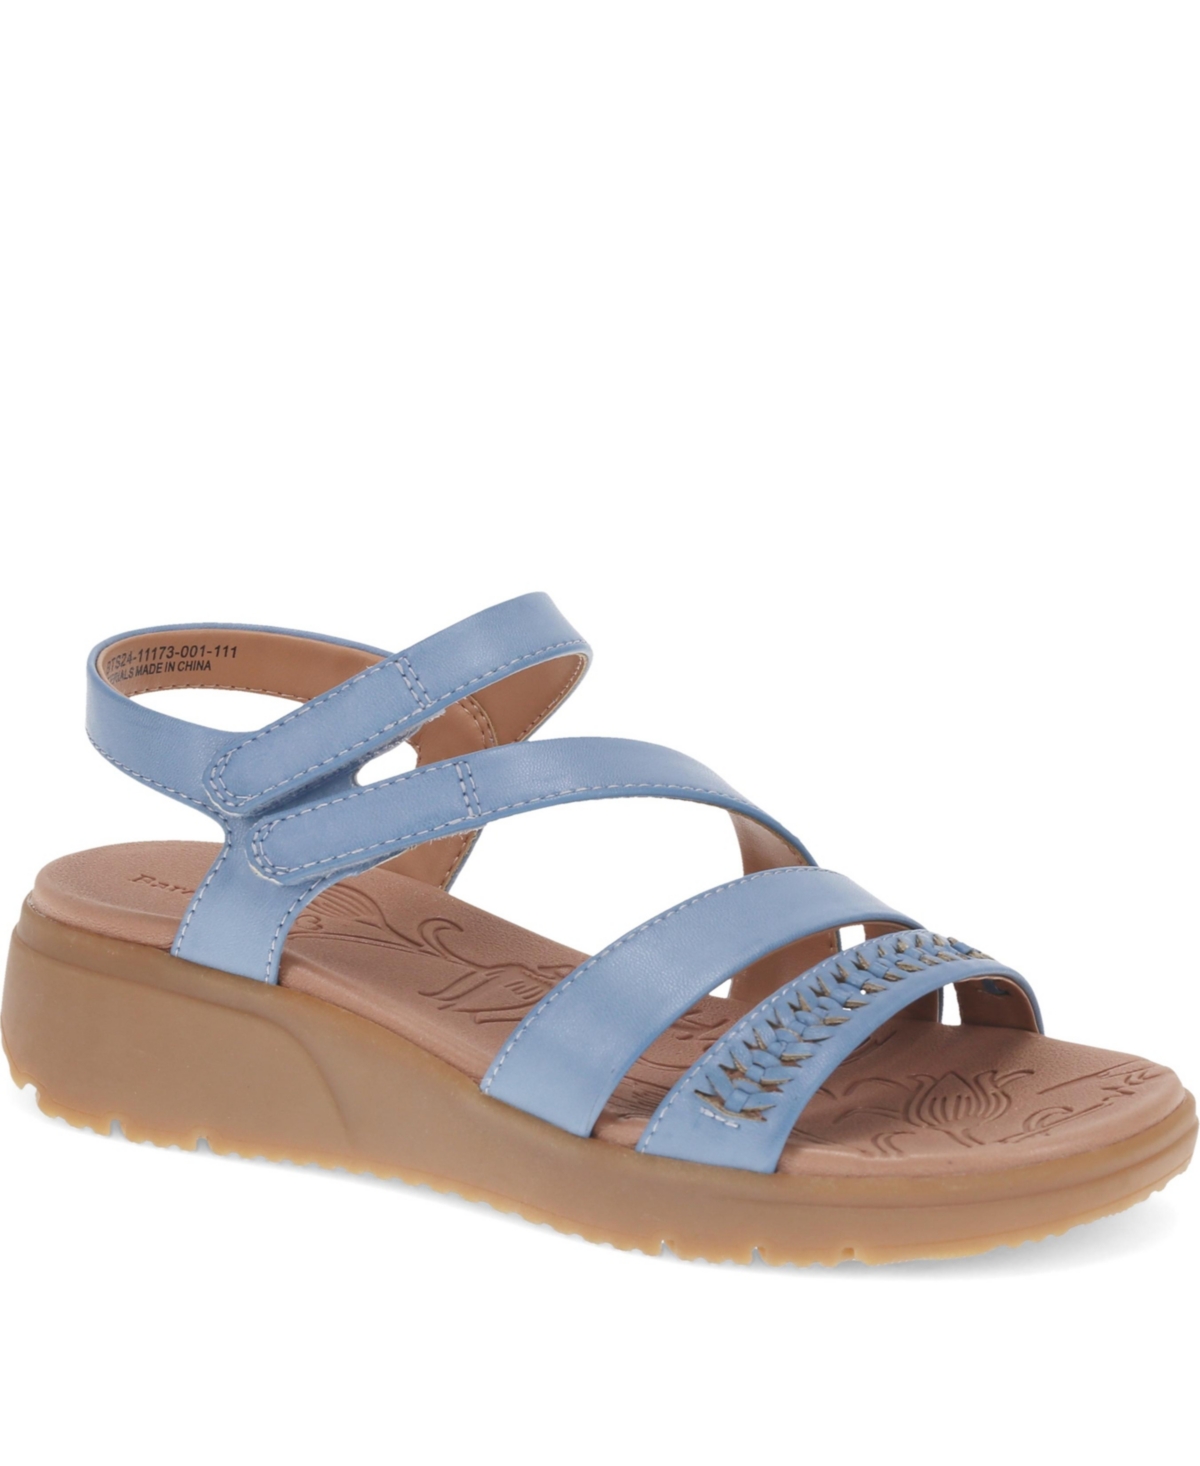 Women's Berry Casual Sandals - Island Blue